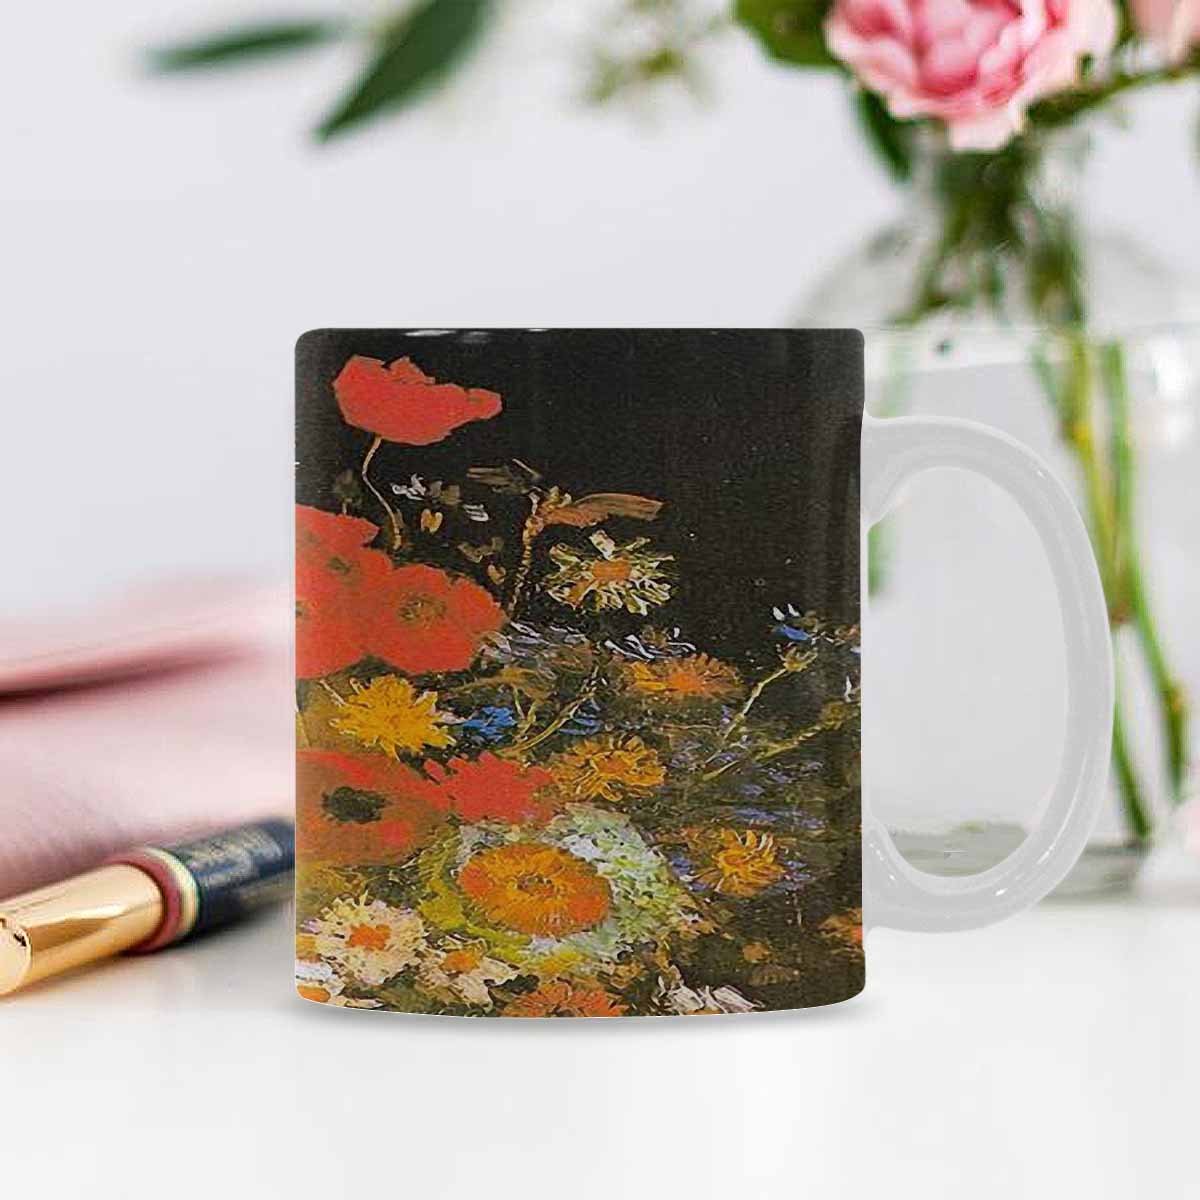 Vintage floral coffee mug or tea cup, Design 60